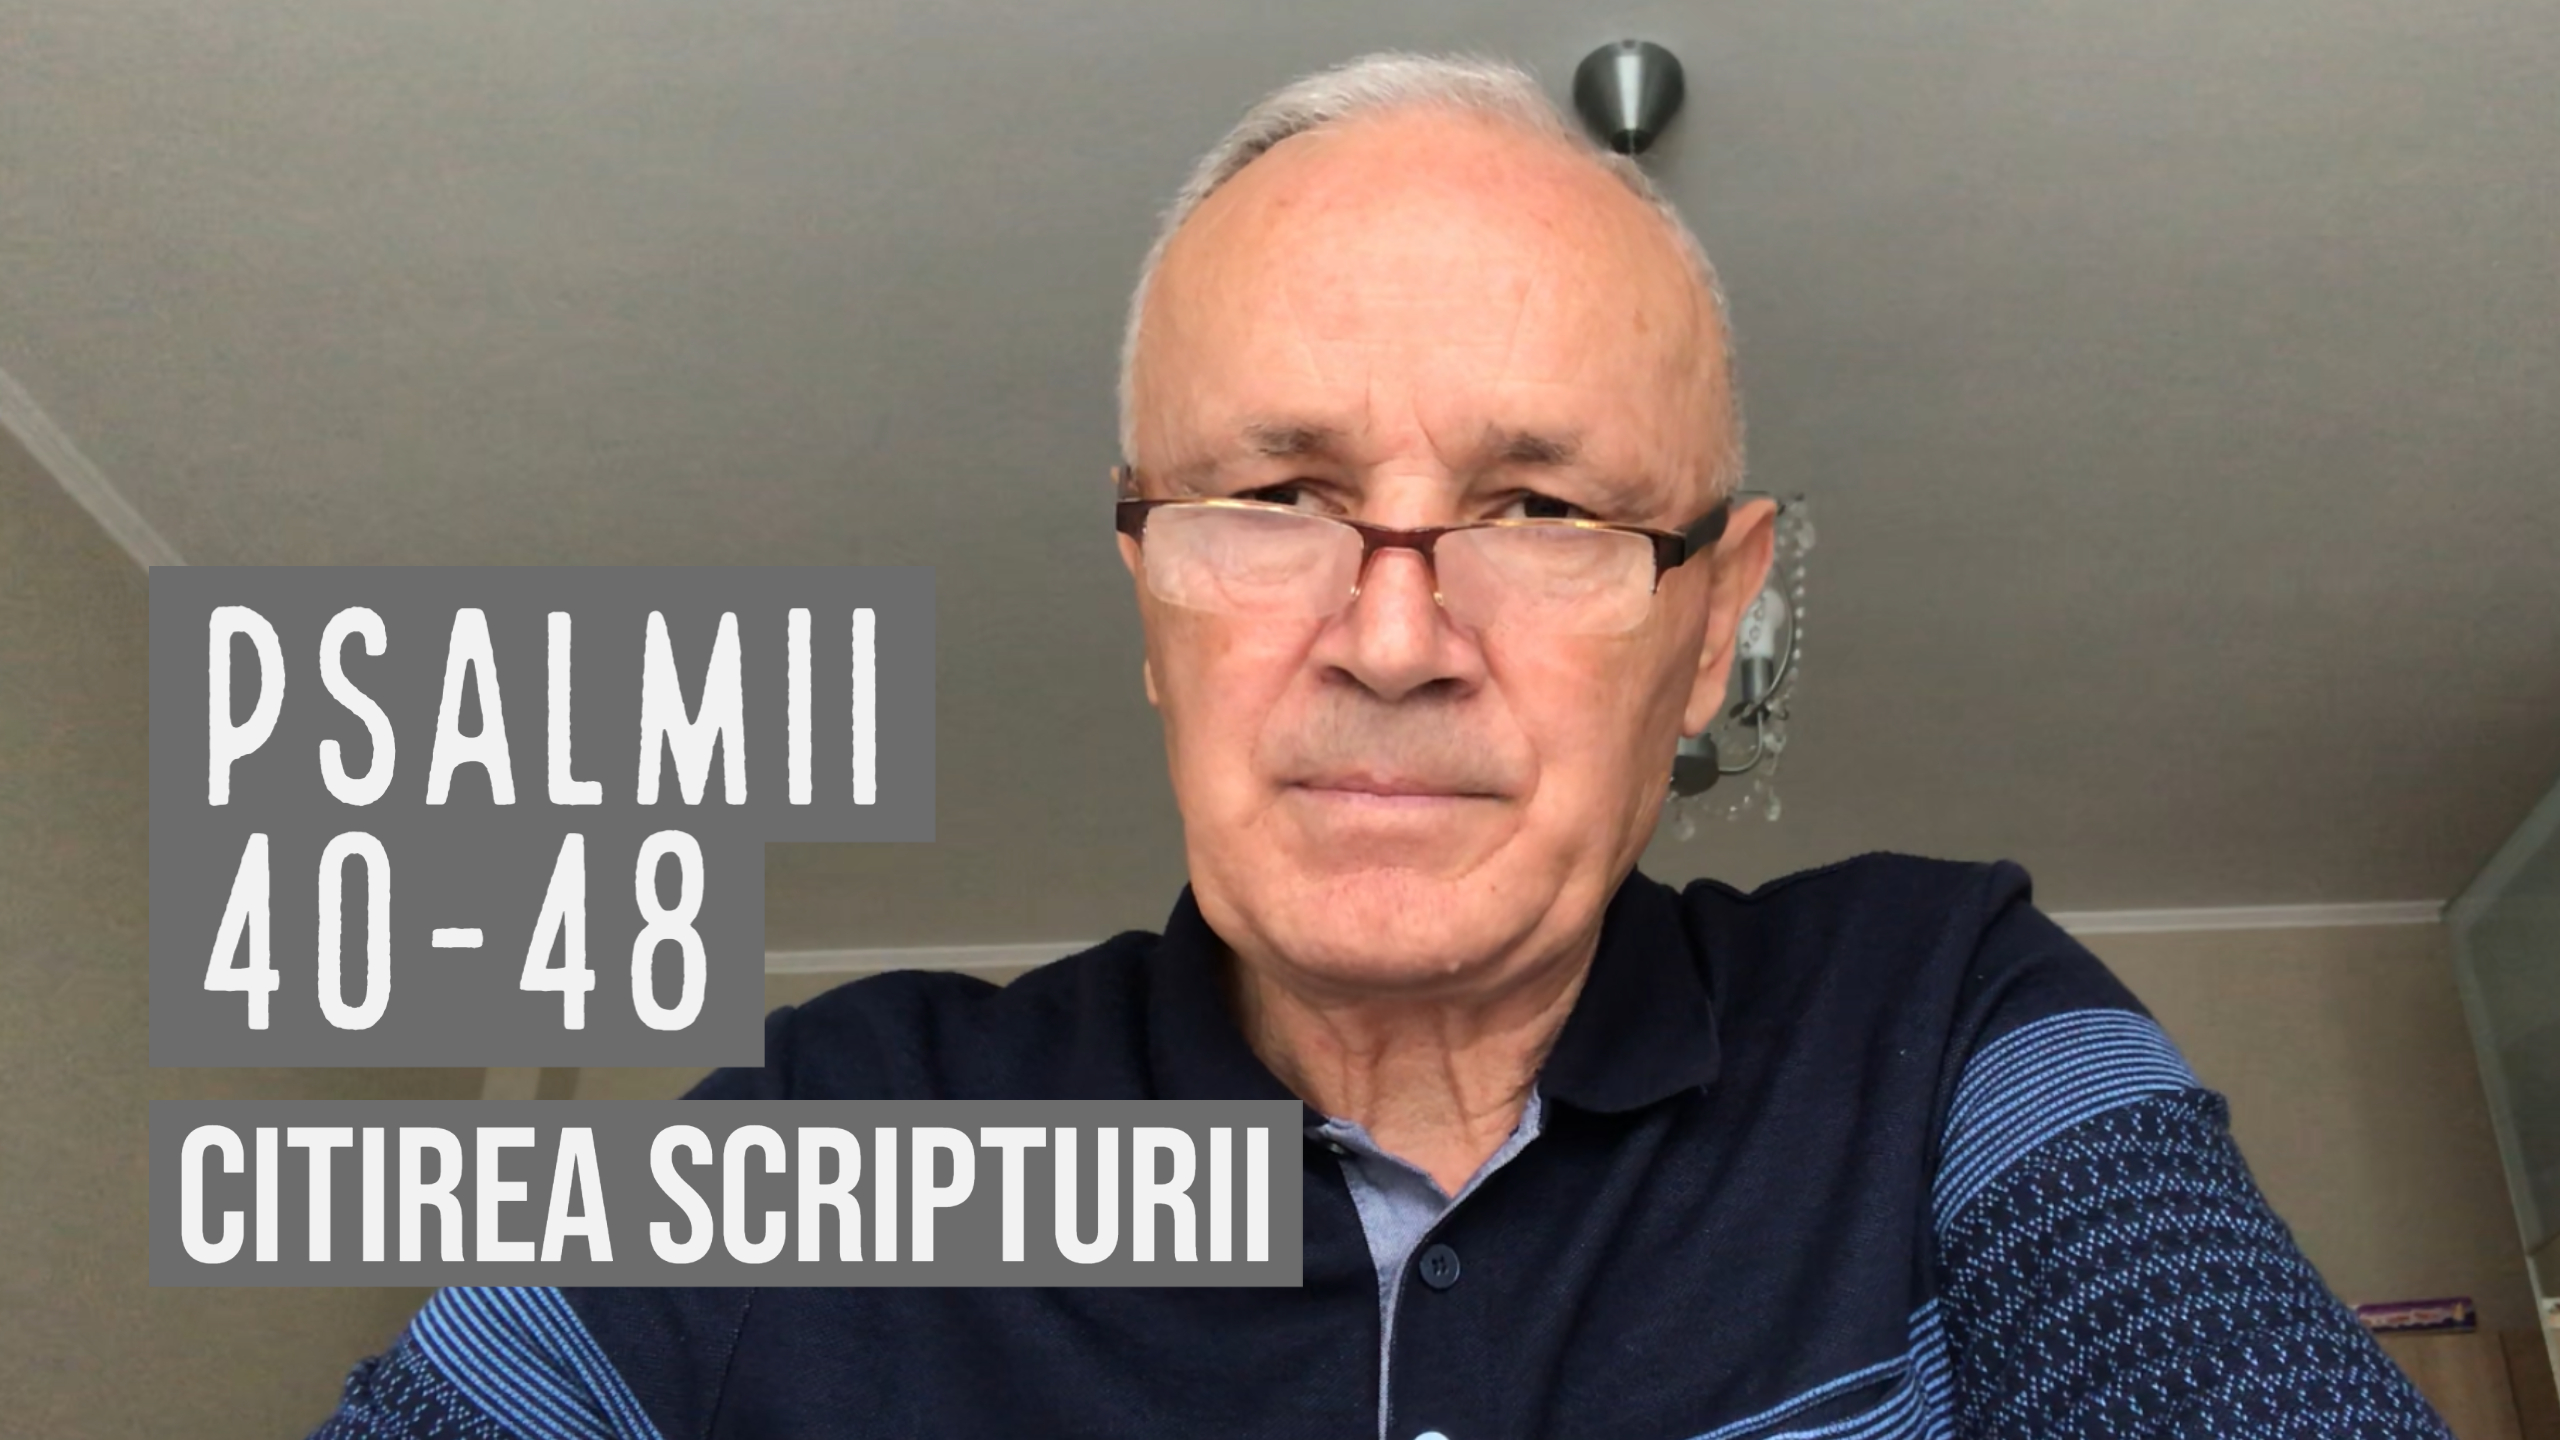 Citirea Scripturii - Psalmii 40-48 - Vasile Lup